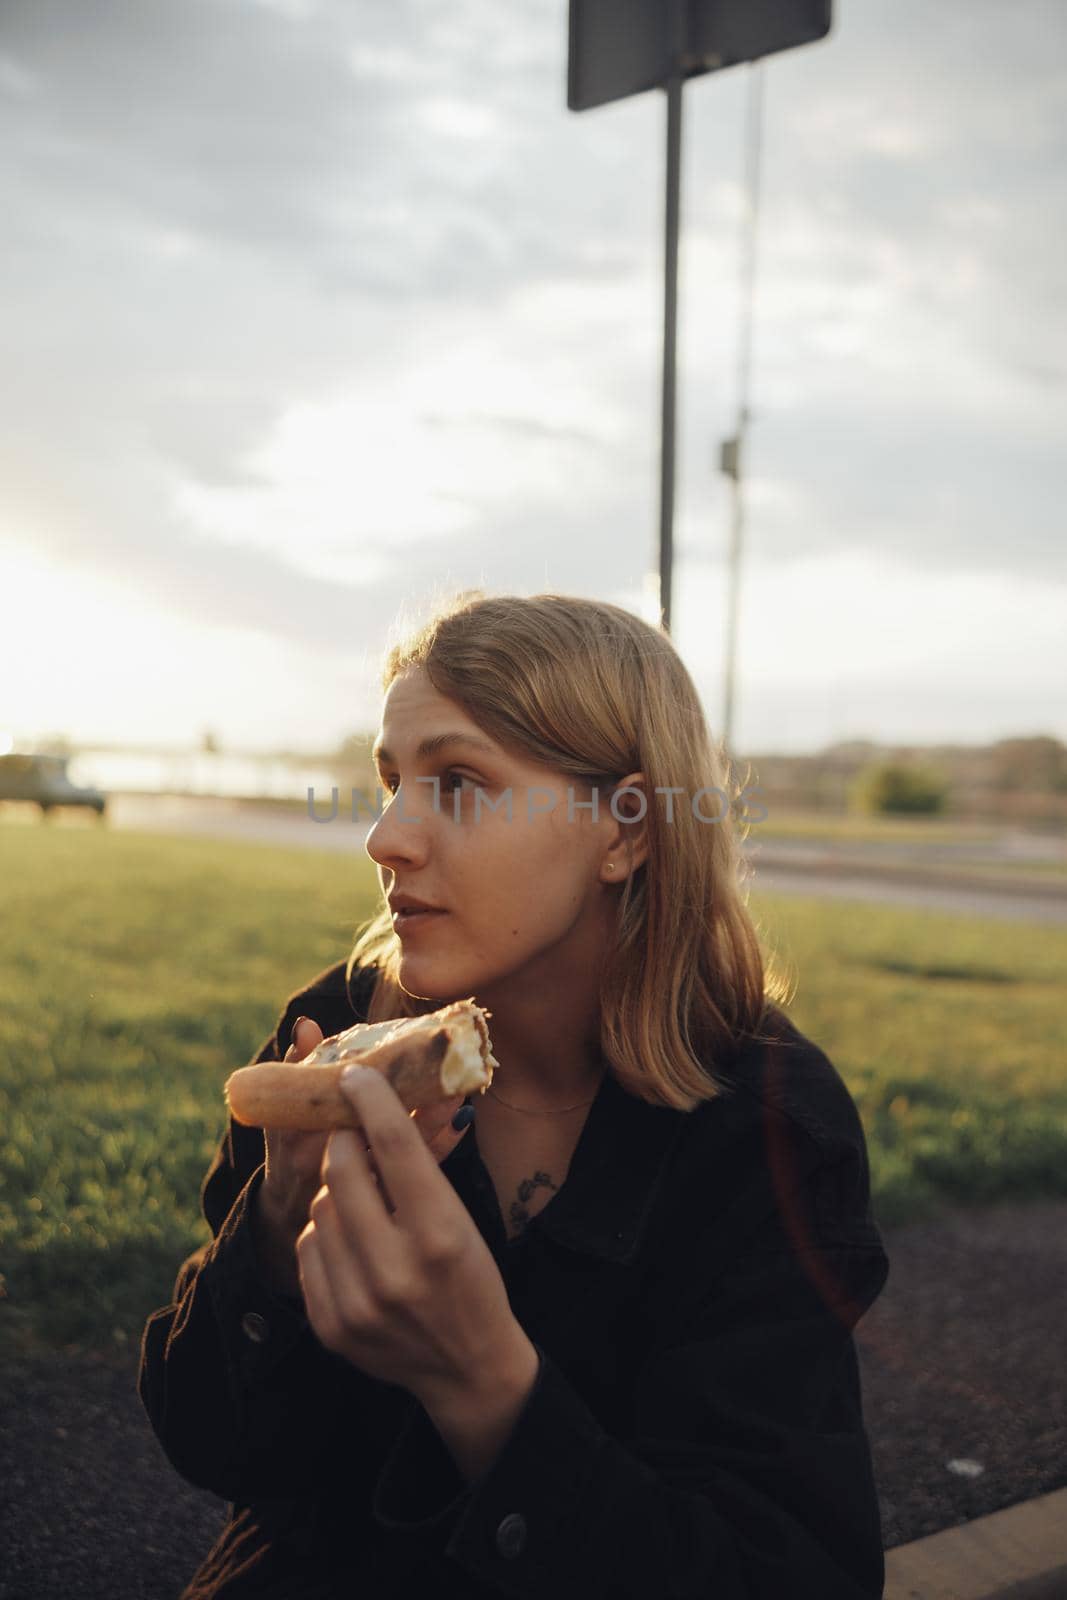 blonde girl eating pizza sitting outside at sunset